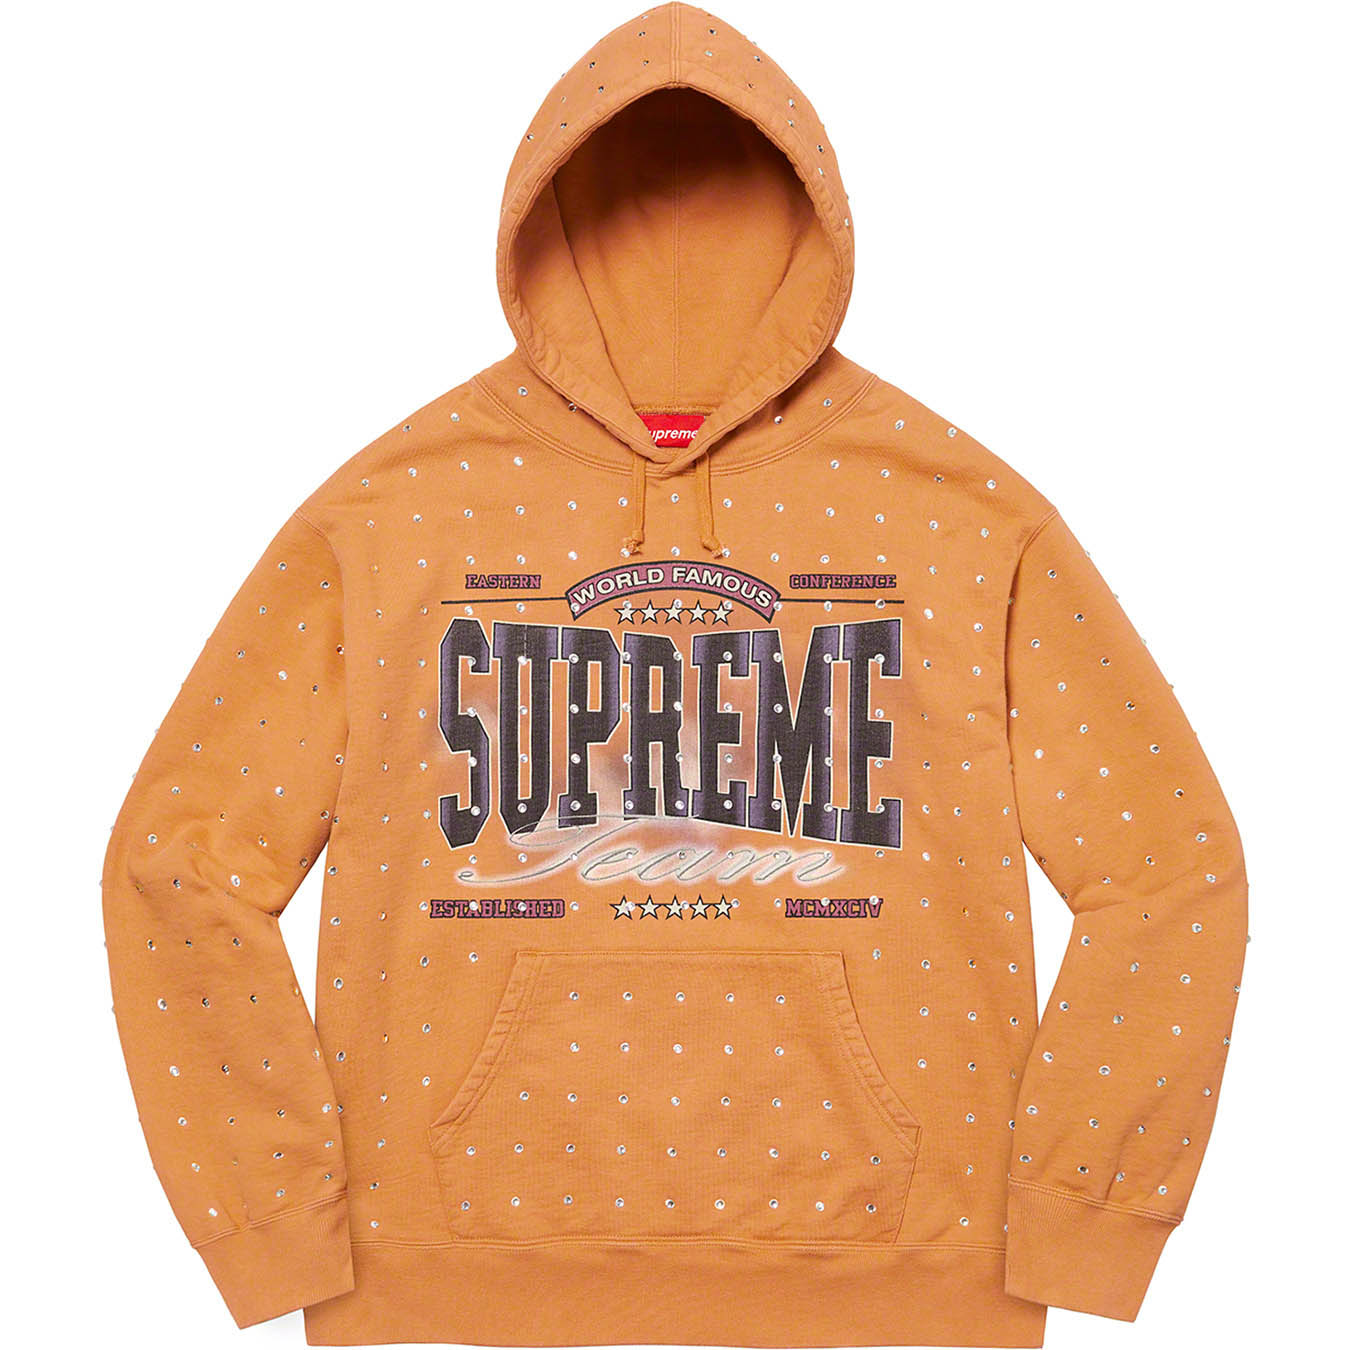 Supreme Rhinestone Hooded Sweatshirt